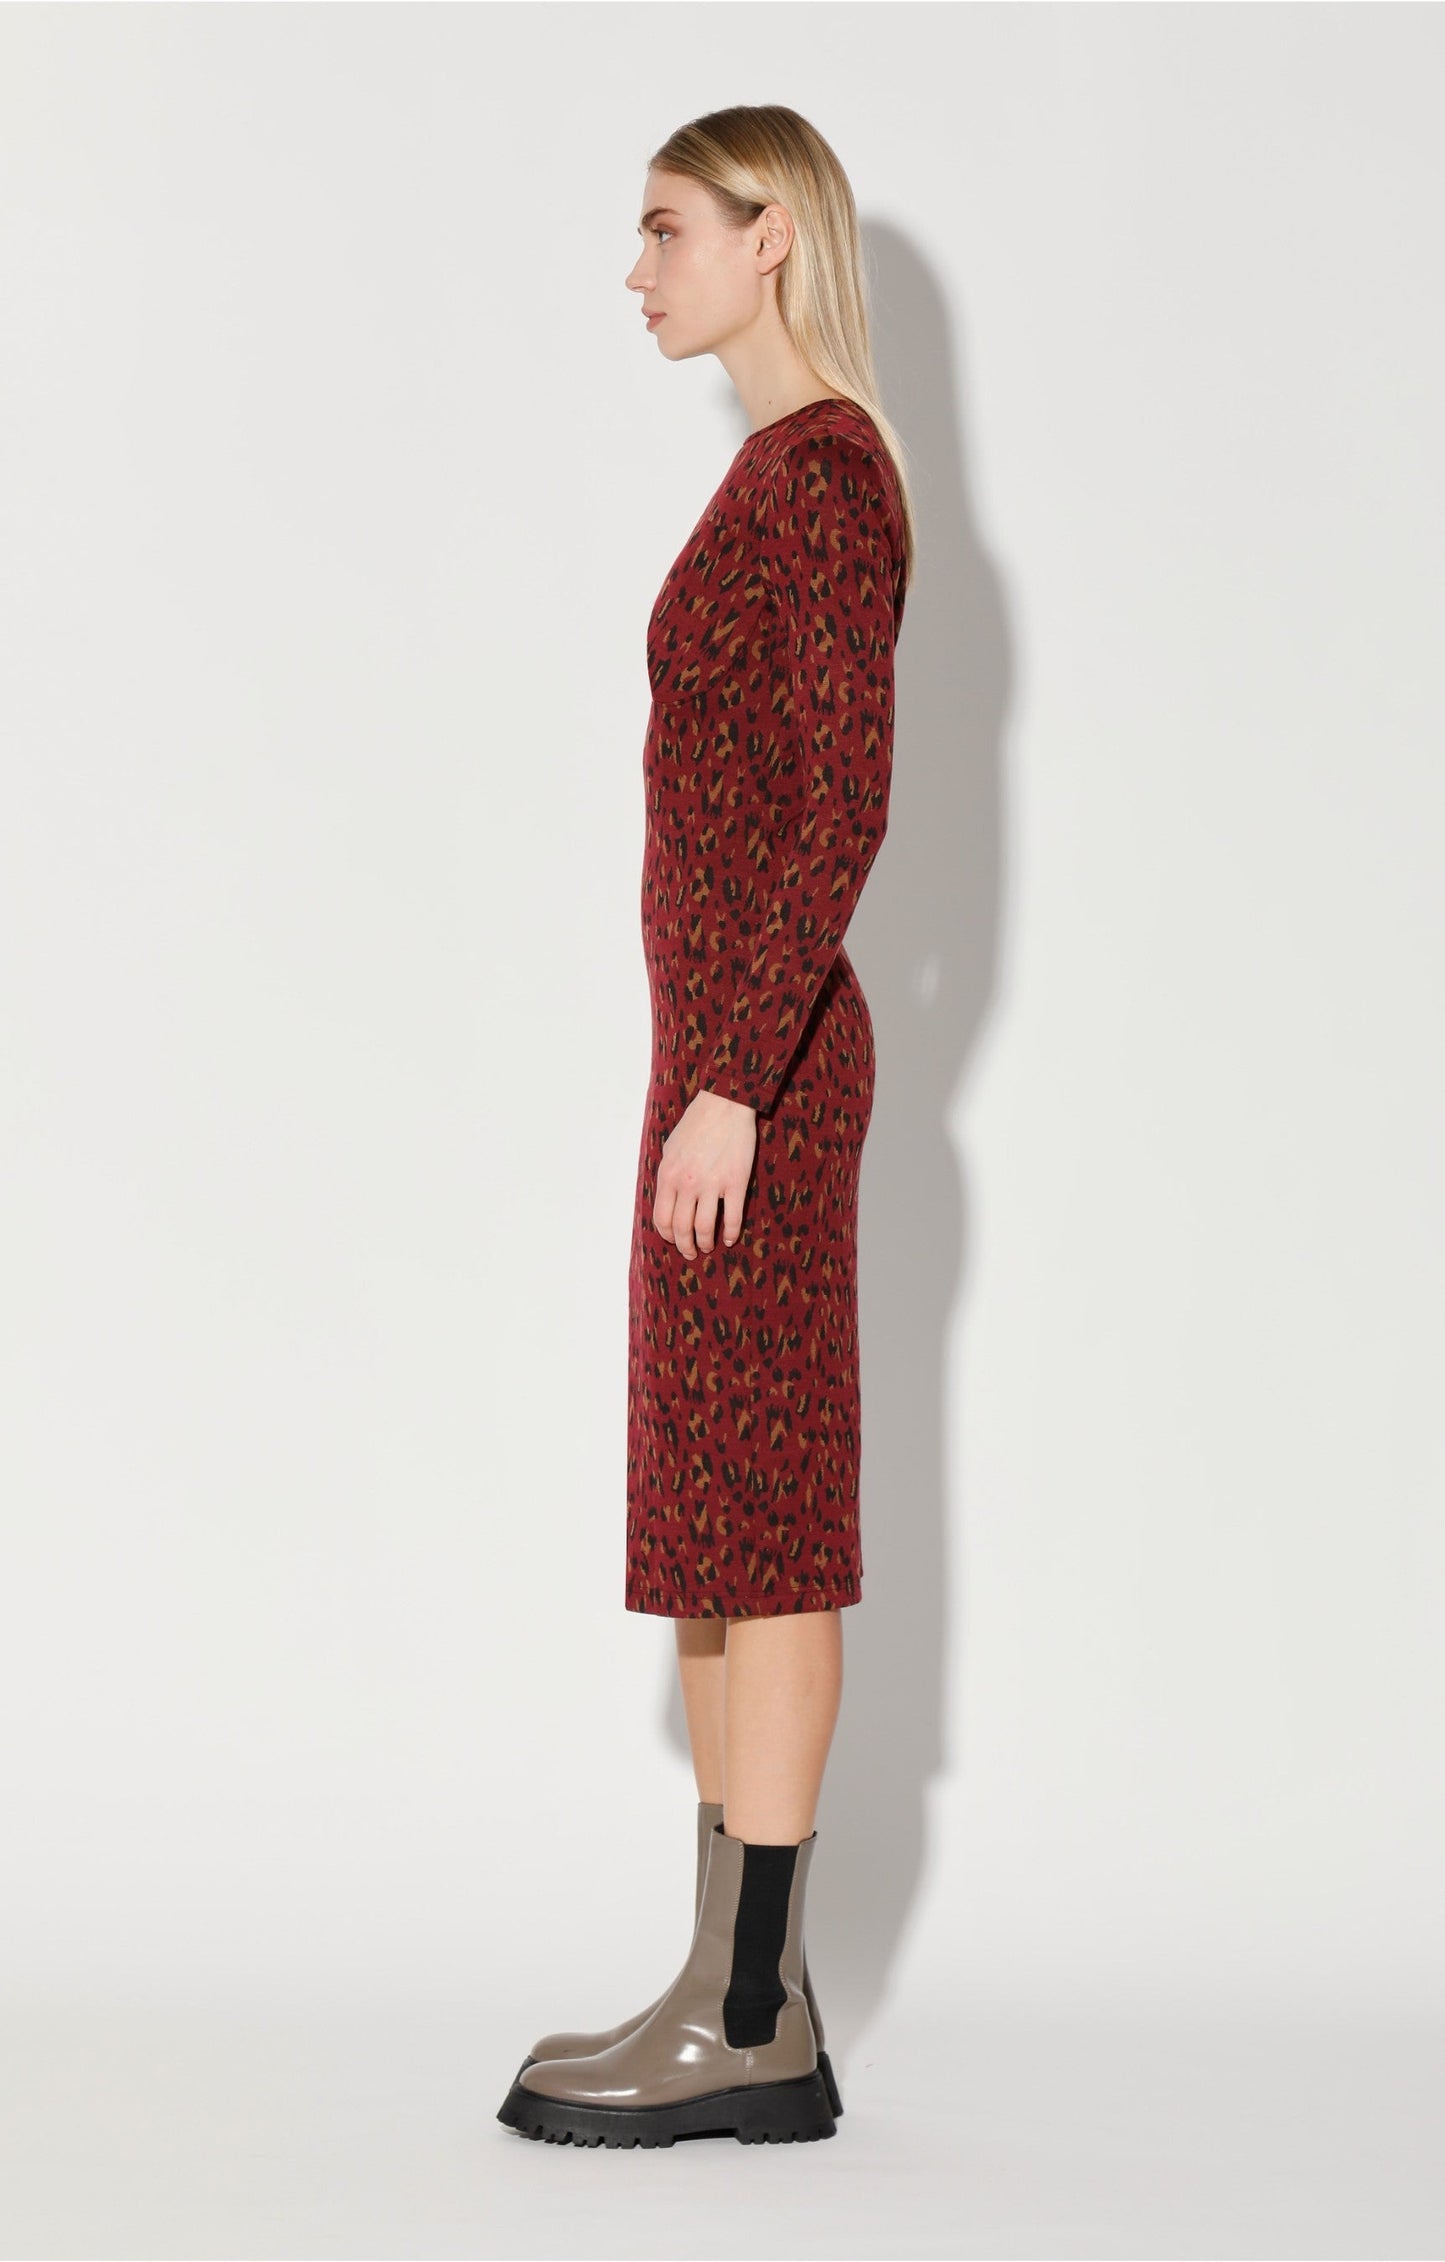 Shaina Dress, Dali Leopard Knit by Walter Baker